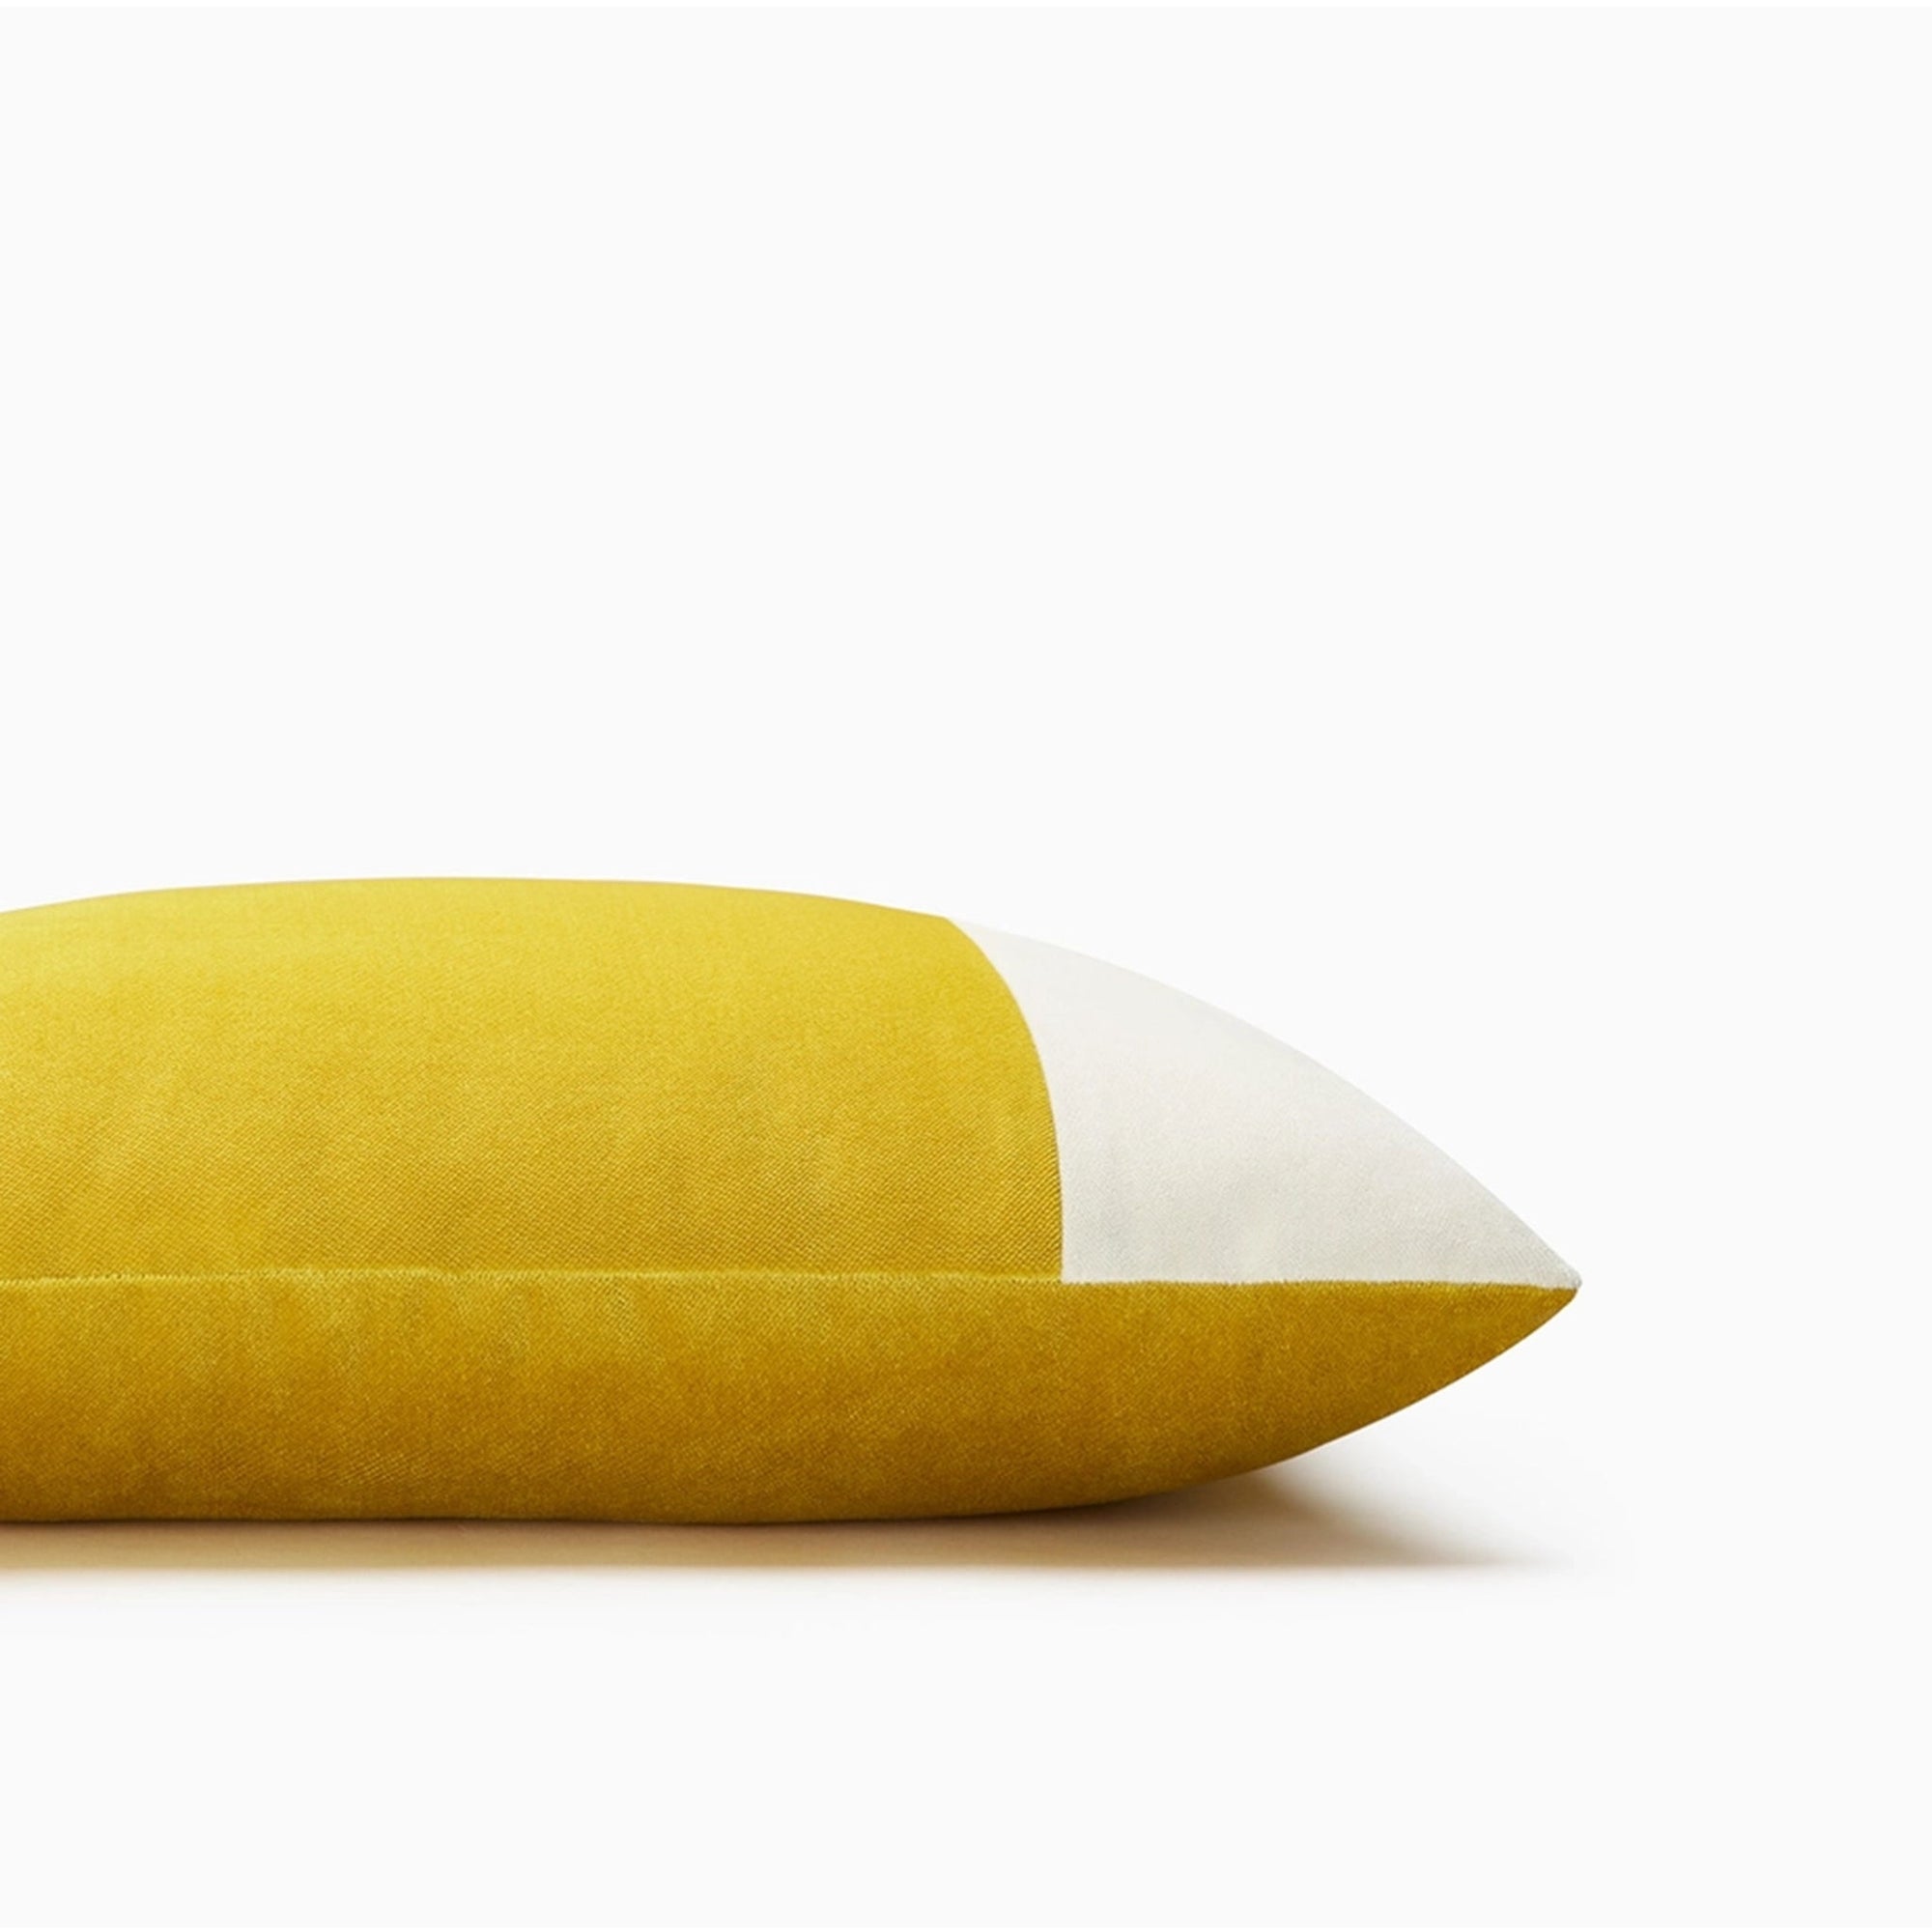 Mustard yellow Italian velvet geometric rectangle lumbar pillow